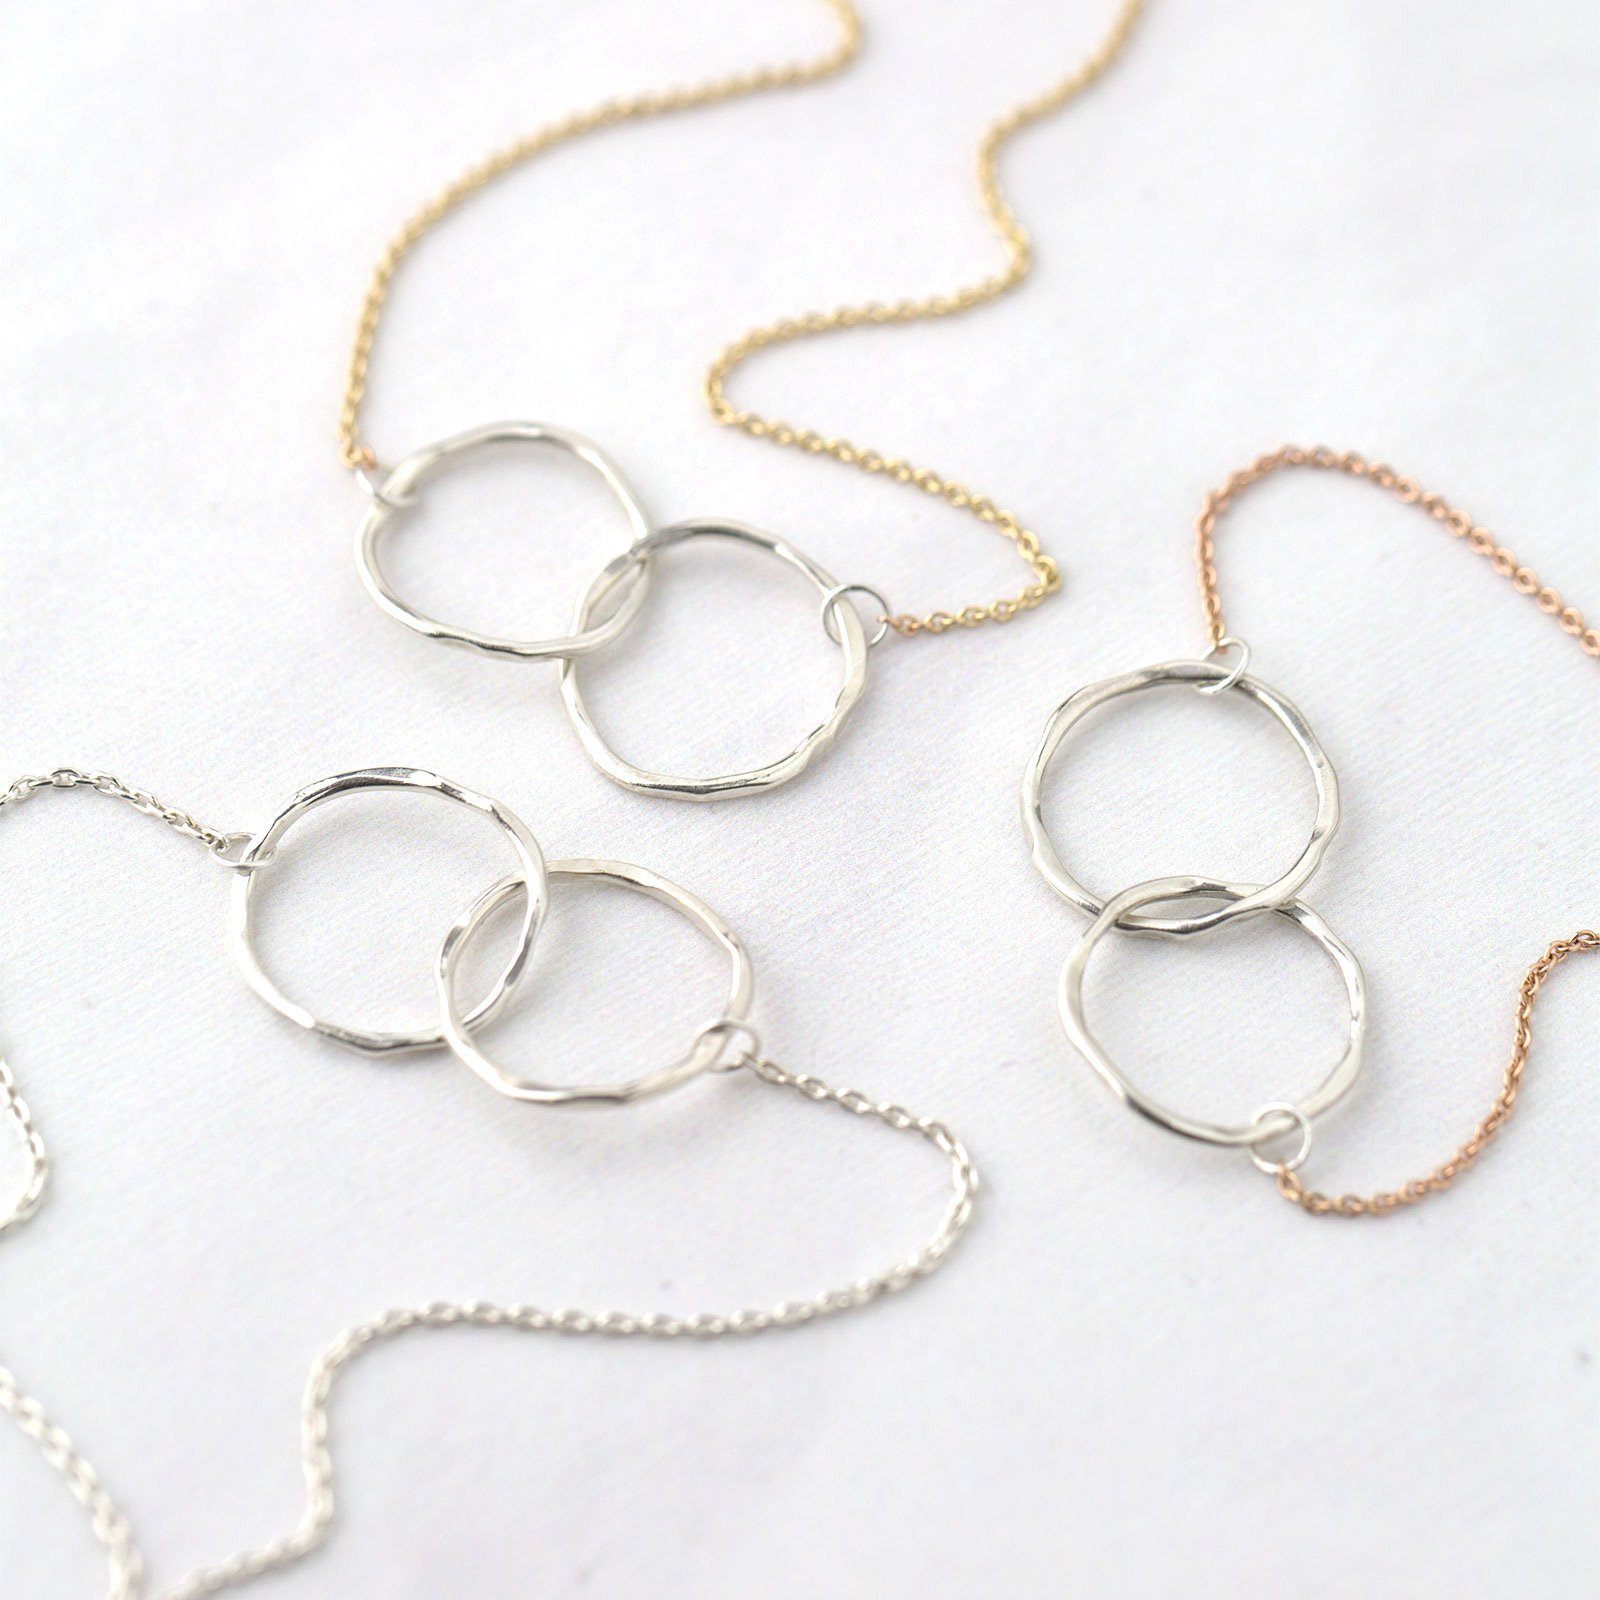 Interlinked Eternity Circles Necklace - Handmade Jewelry by Burnish